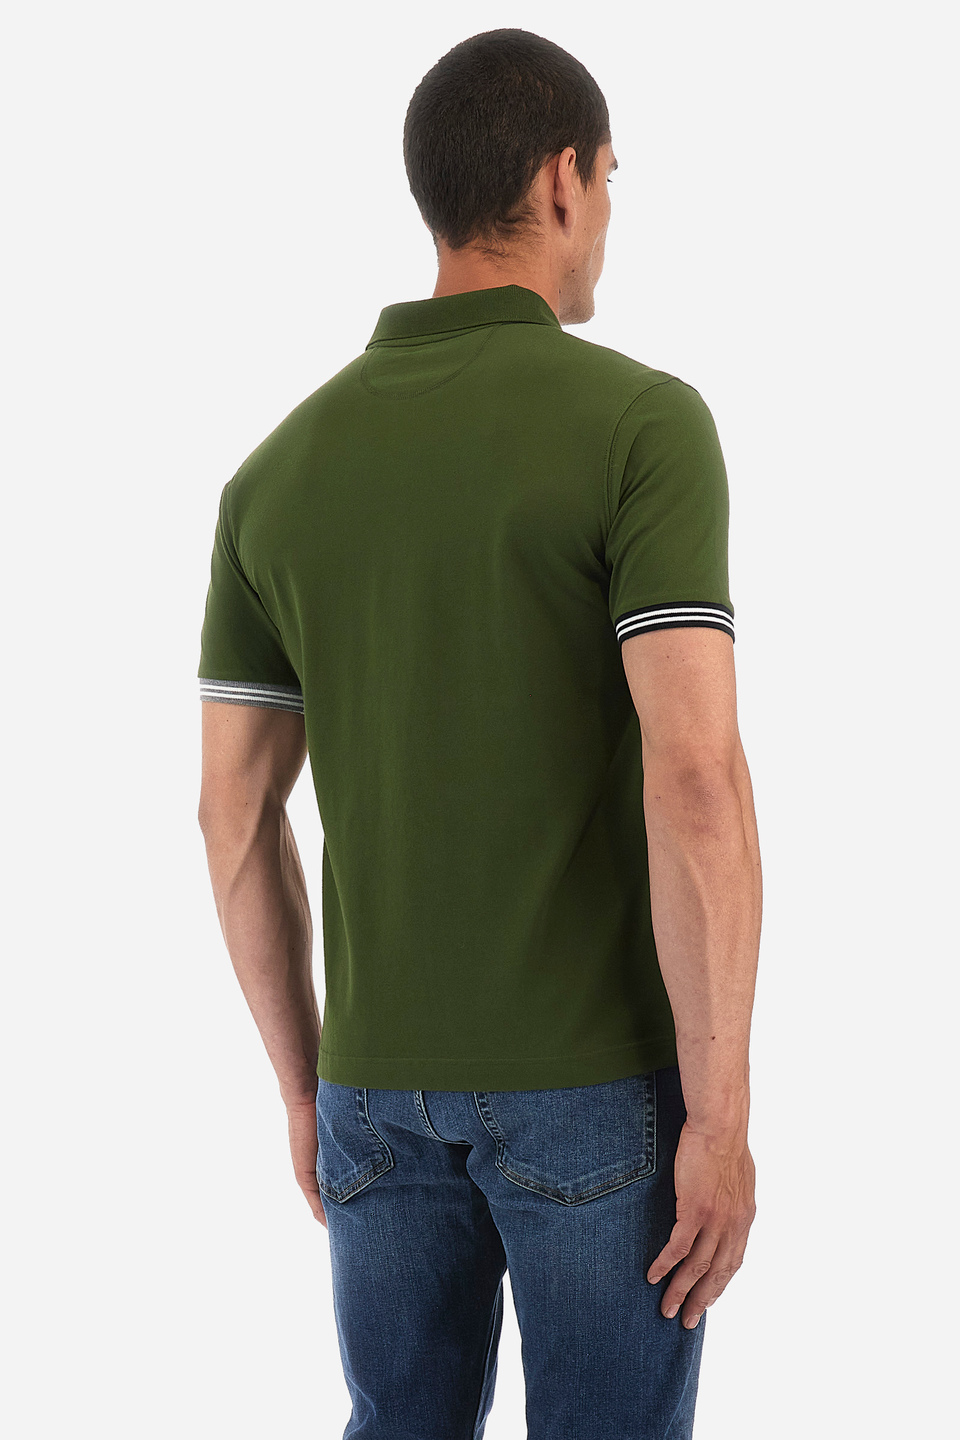 Men's polo shirt in a regular fit - Waddell | La Martina - Official Online Shop